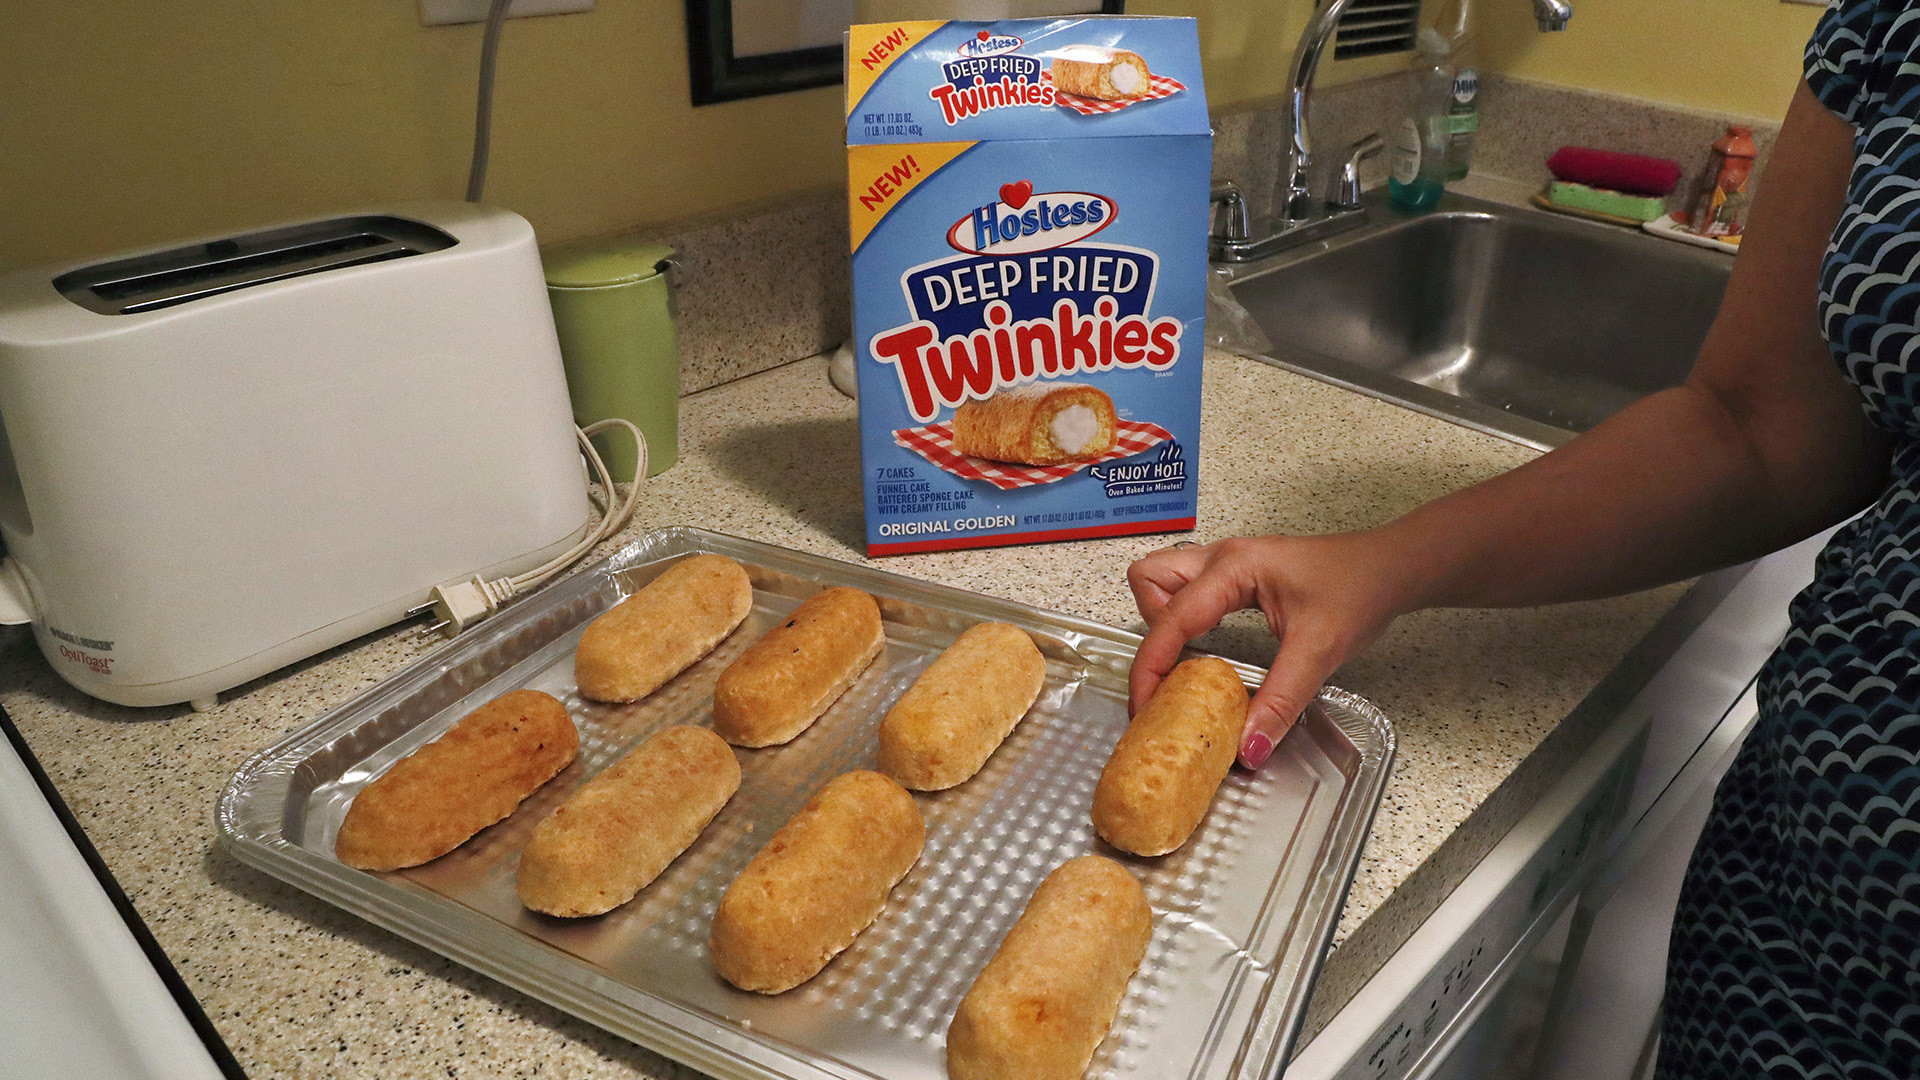 ct-hostess-deep-fried-twinkies-20160812